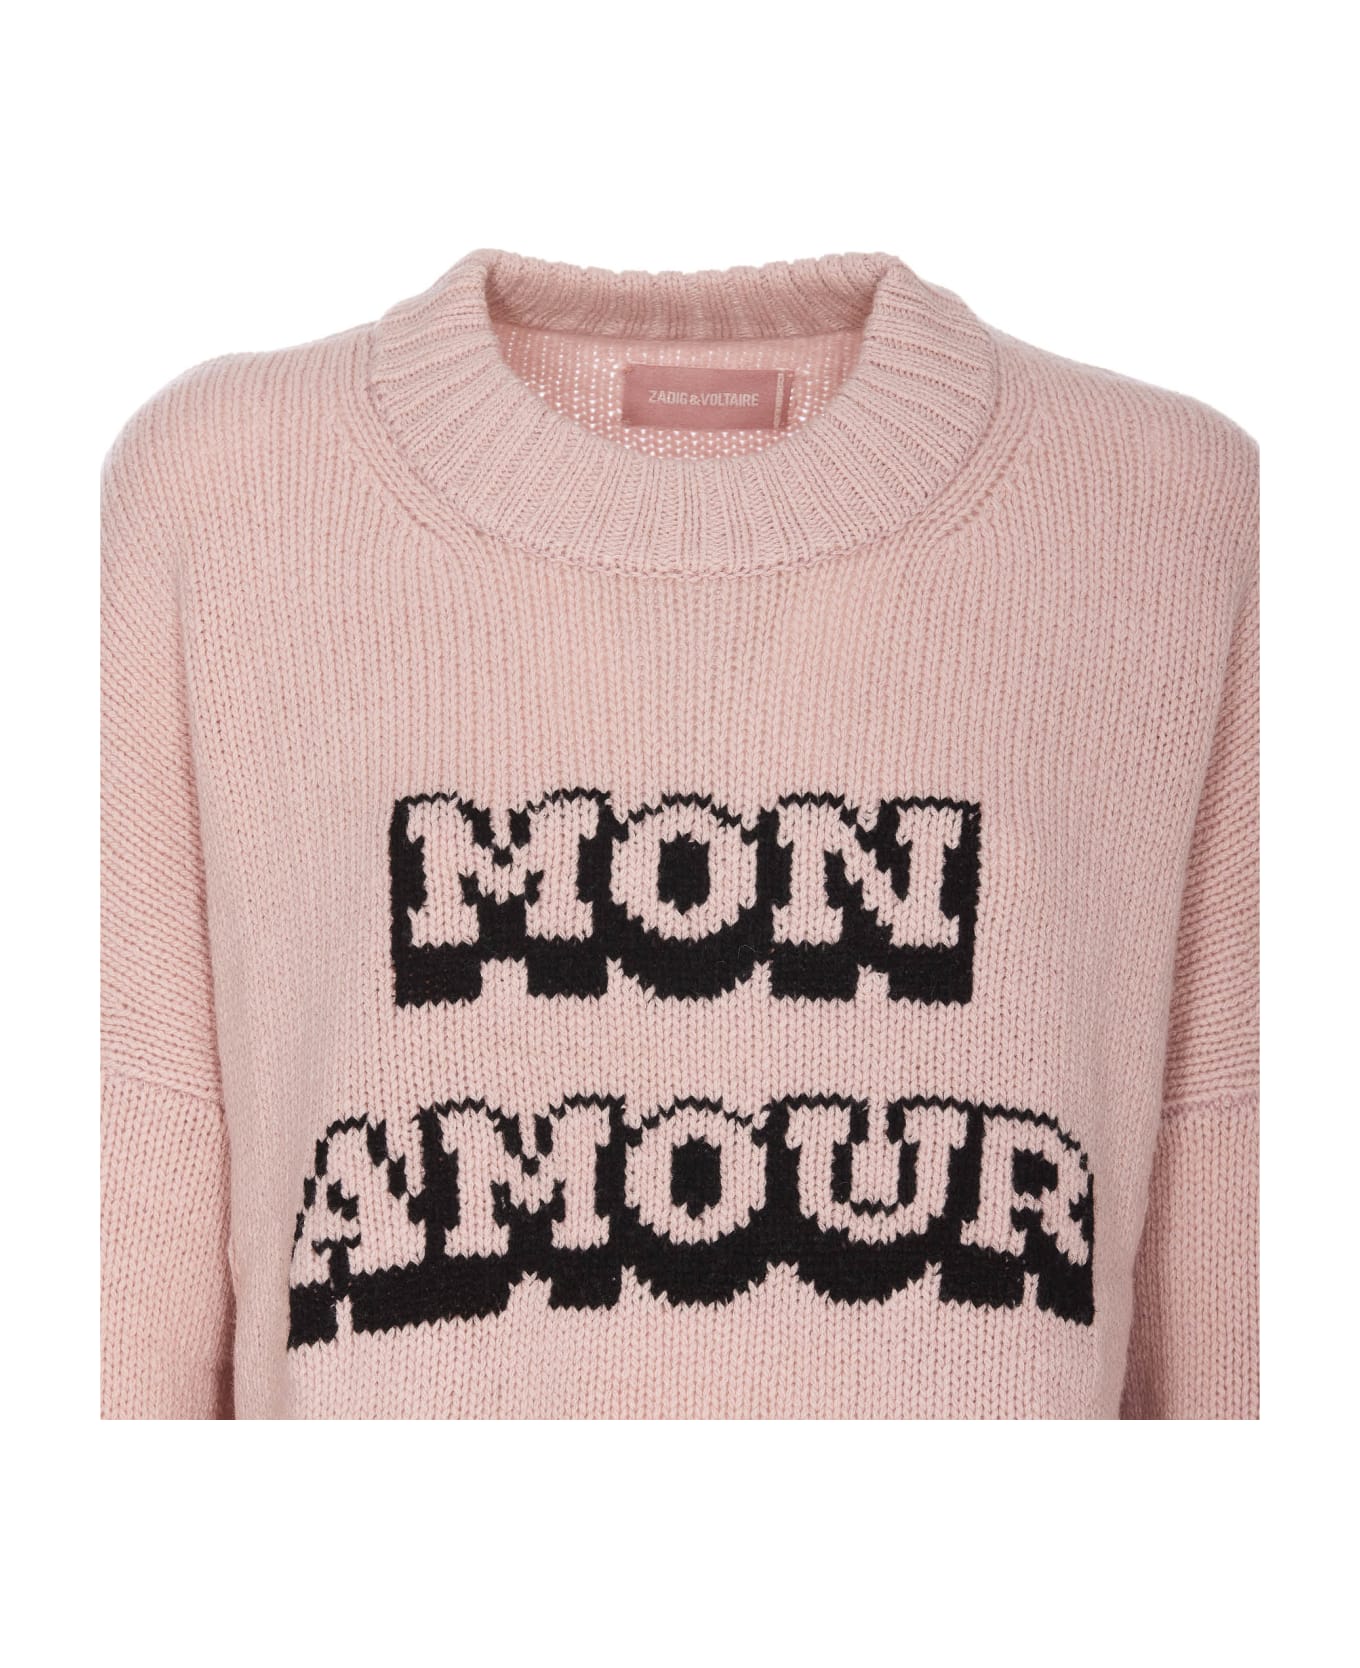 Zadig & Voltaire Malta Mon Amour Sweater - Pink